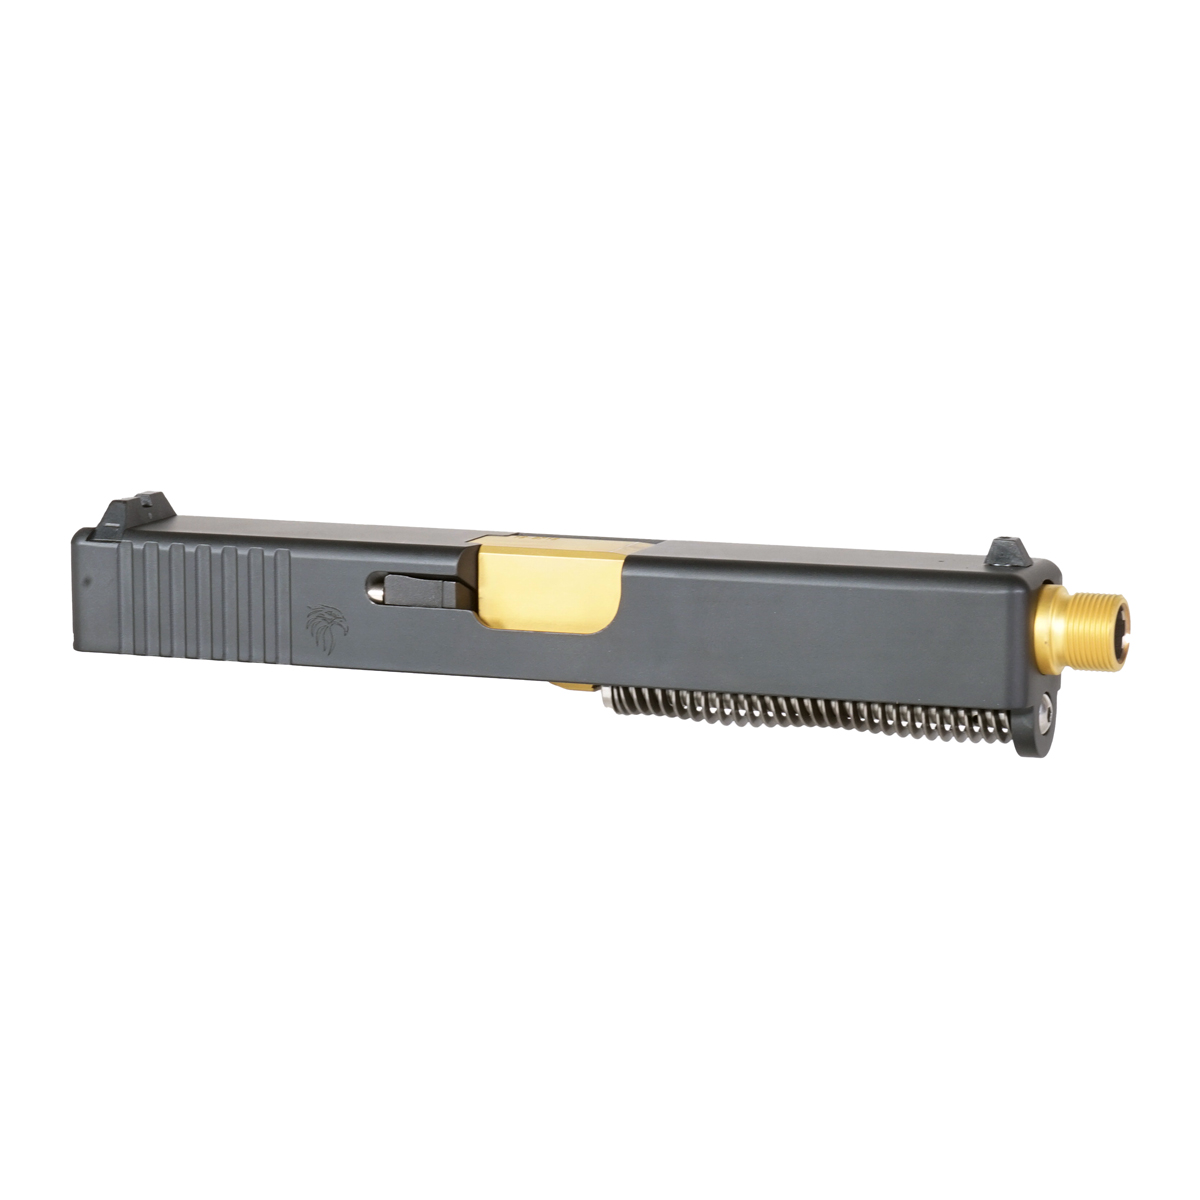 DTT 'Repunit Prime' 9mm Complete Slide Kit - Glock 19 Gen 1-3 Compatible